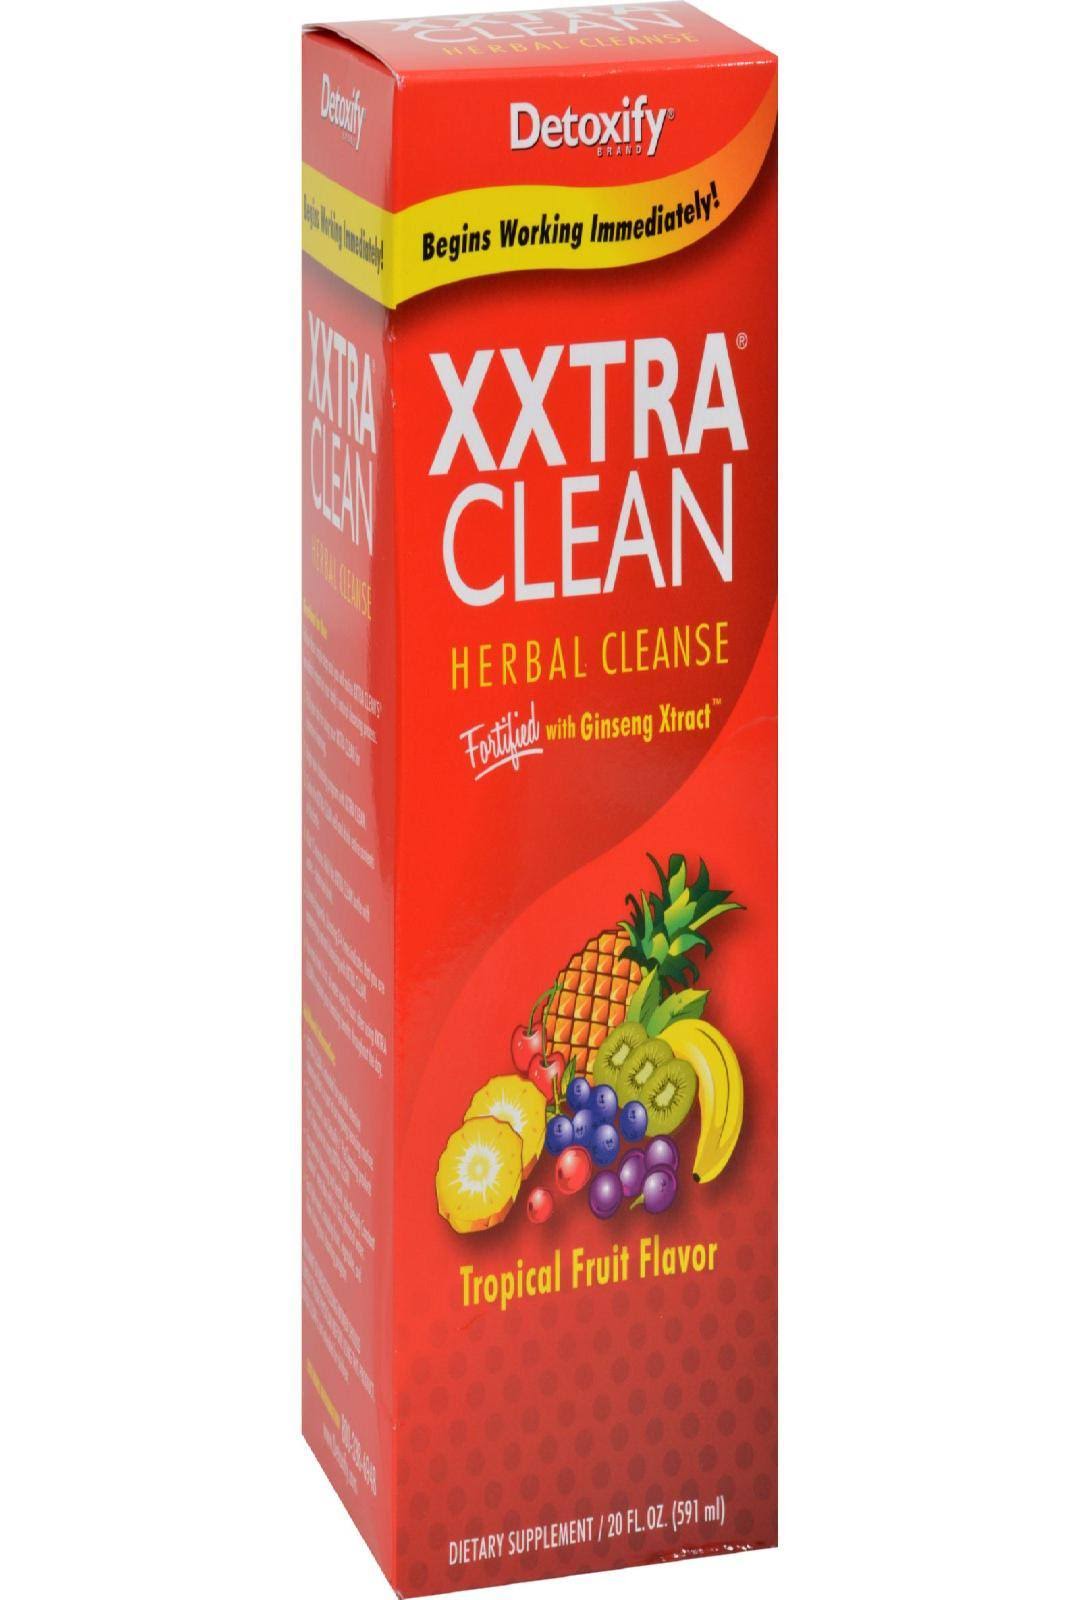 Detoxify Xxtra Clean Herbal Cleanse - Tropical Fruit Flavor